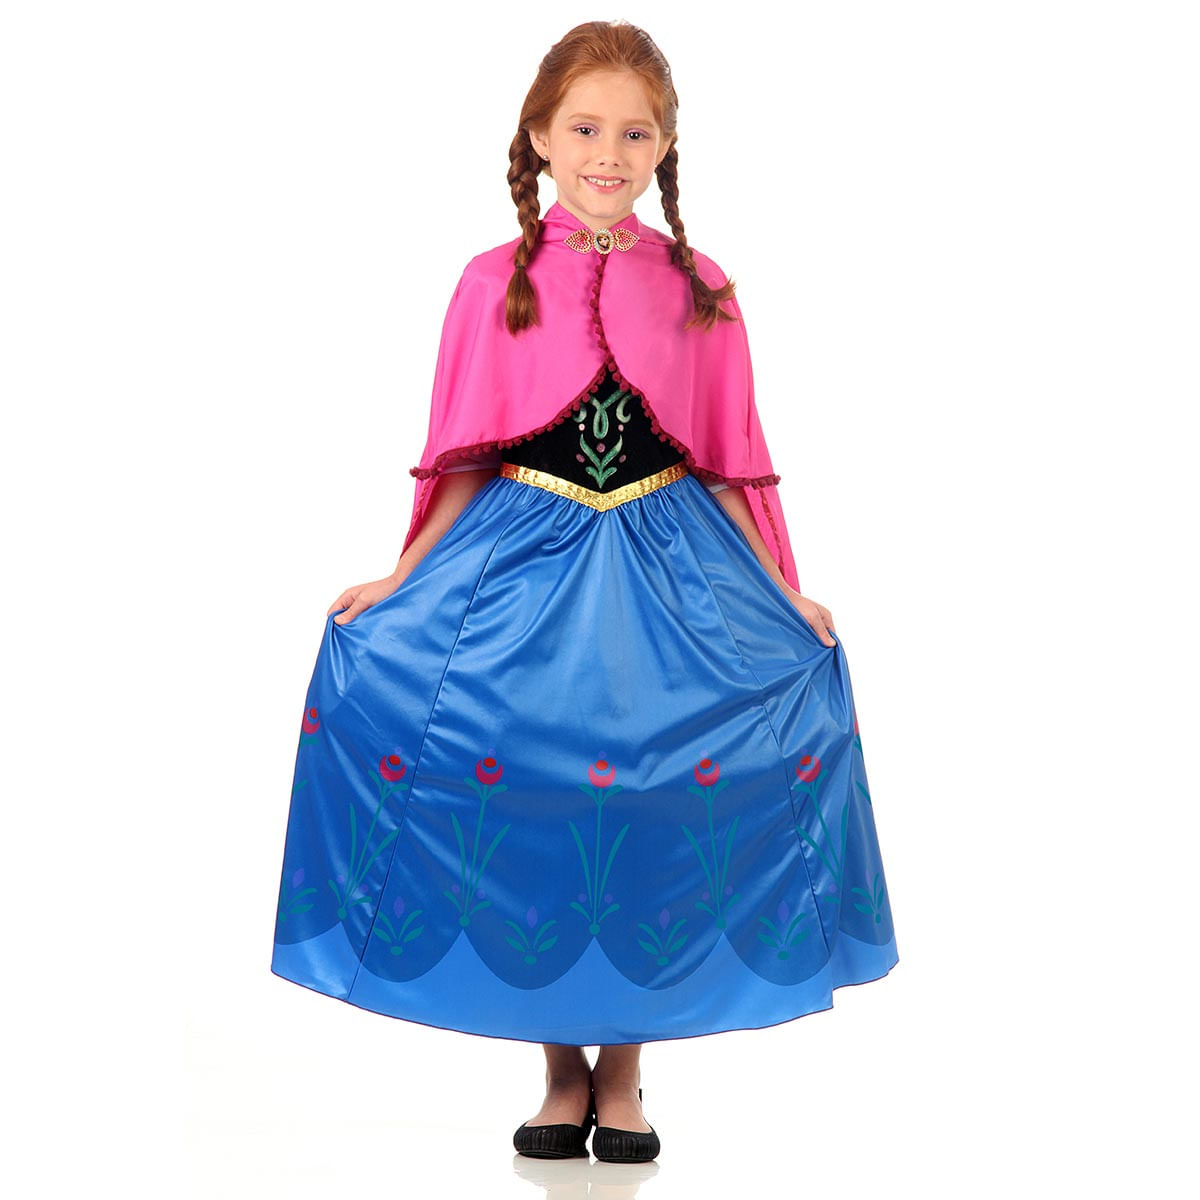 Fantasia Anna Frozen Infantil Luxo - Disney P / UNICA